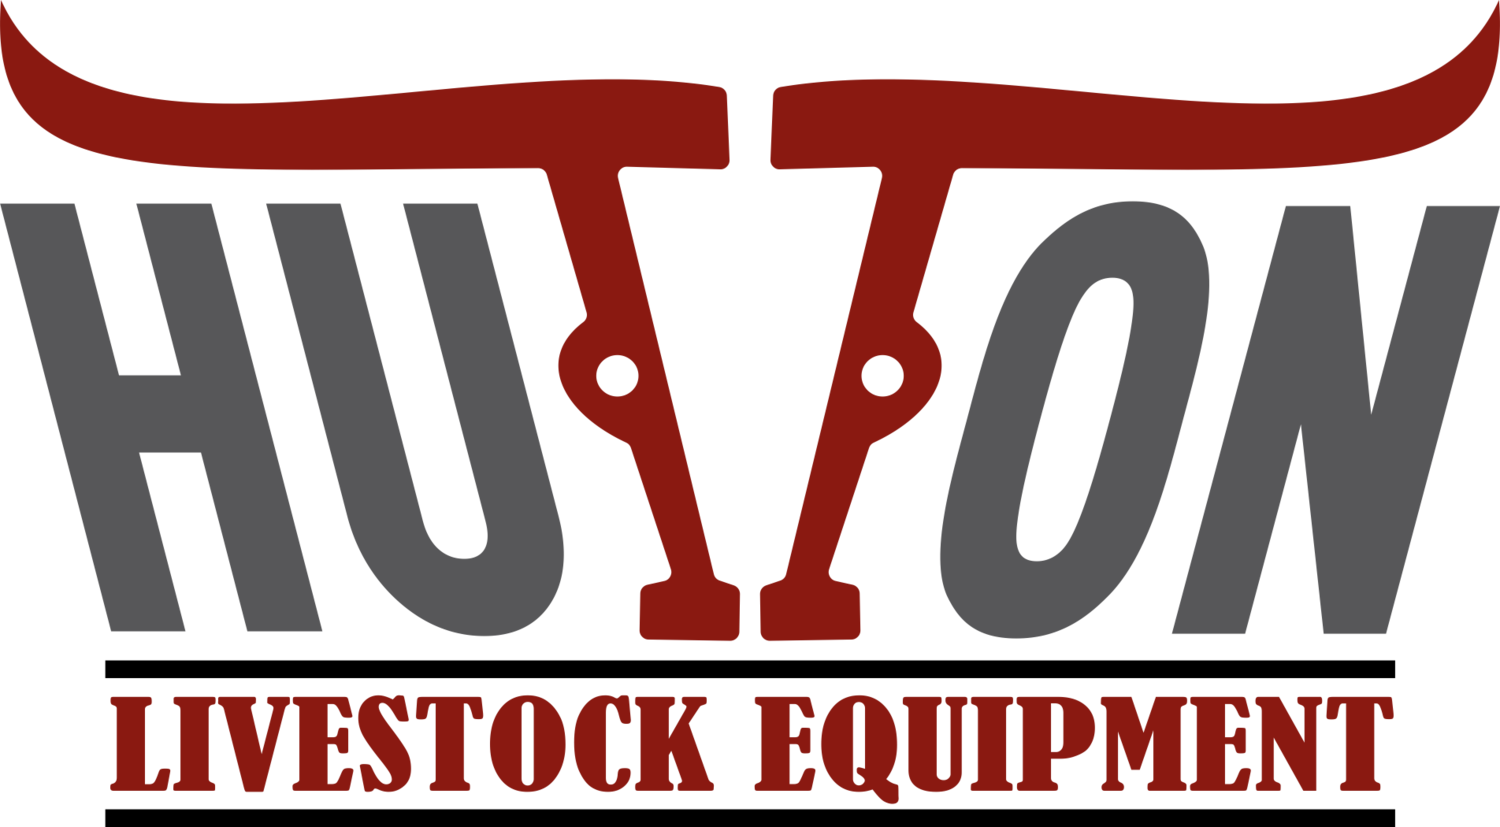 Hutton Livestock Equipment Ltd.